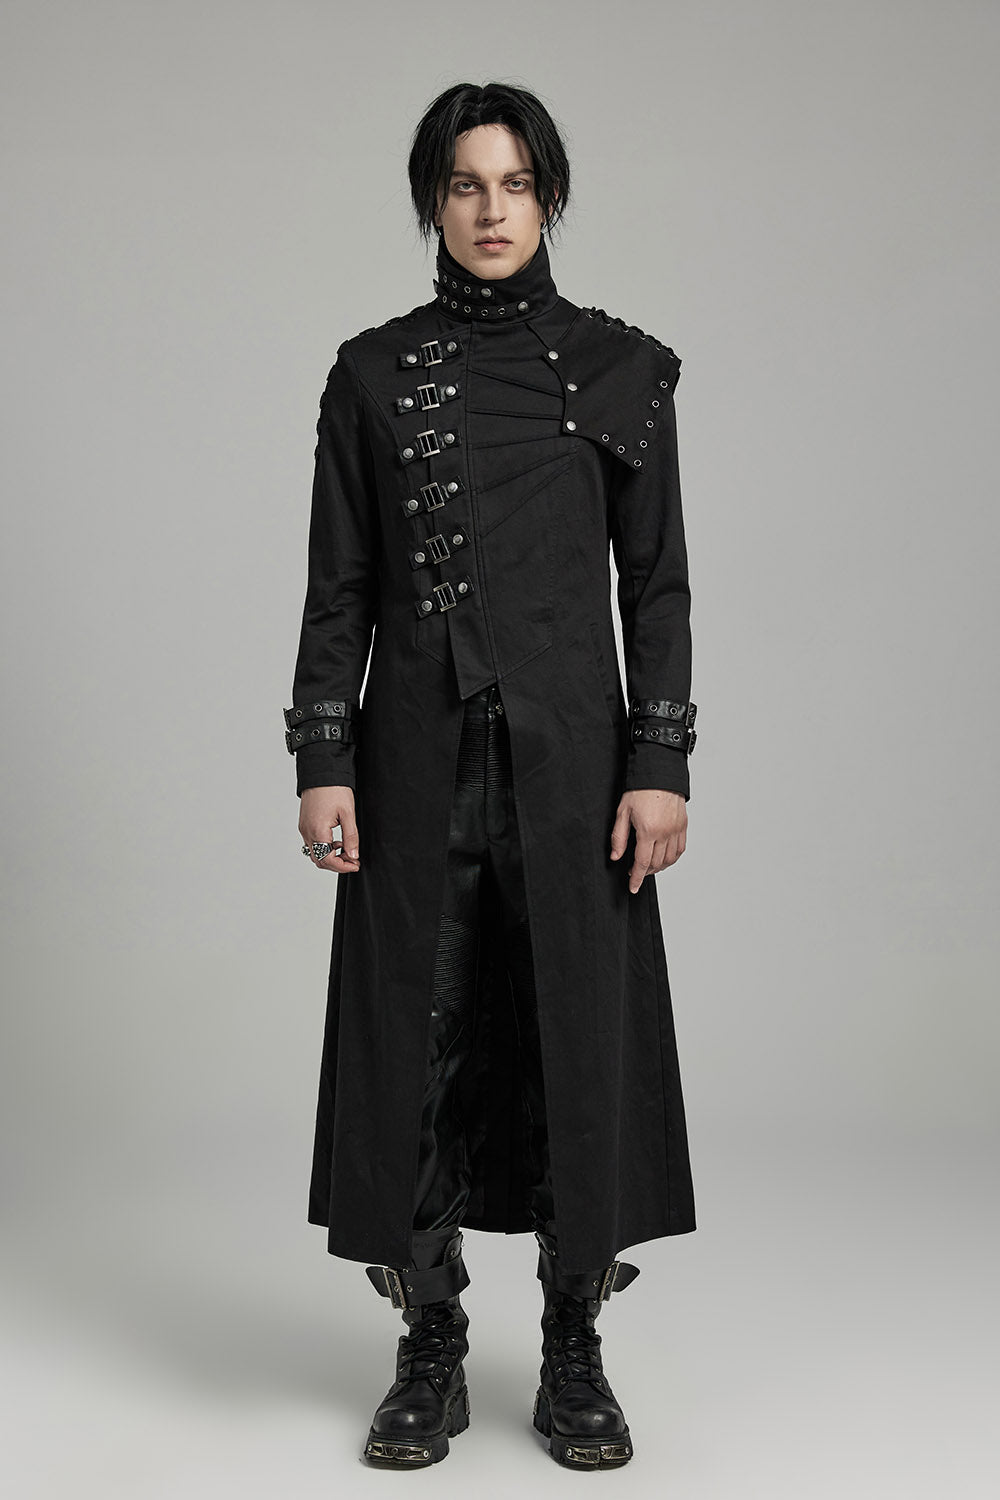 mens gothic jacket